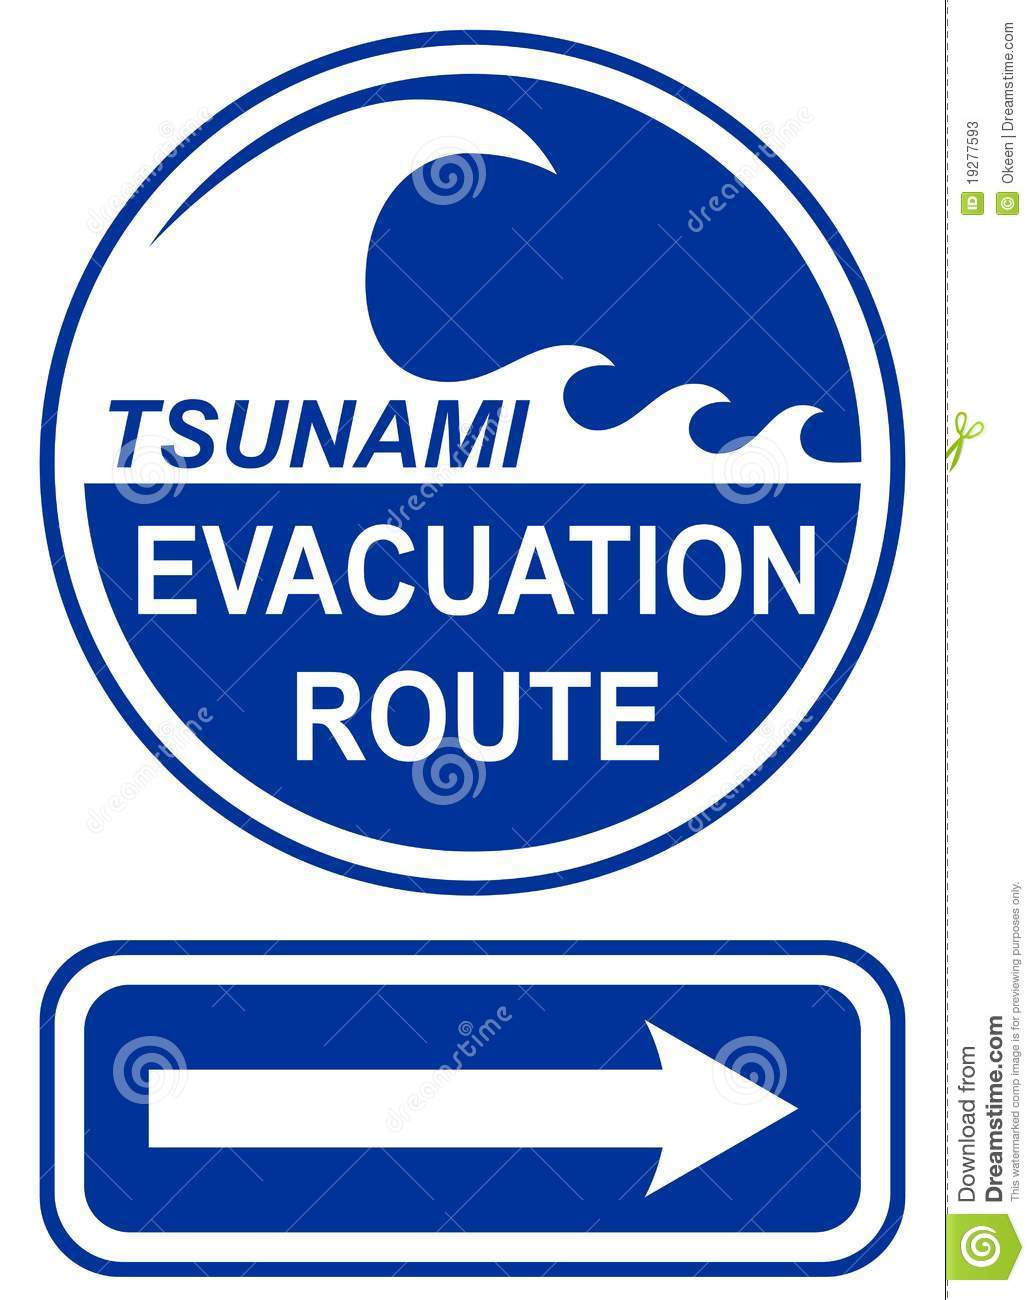 Tsunami Evacuation Route Sign Stock Photos   Image  19277593